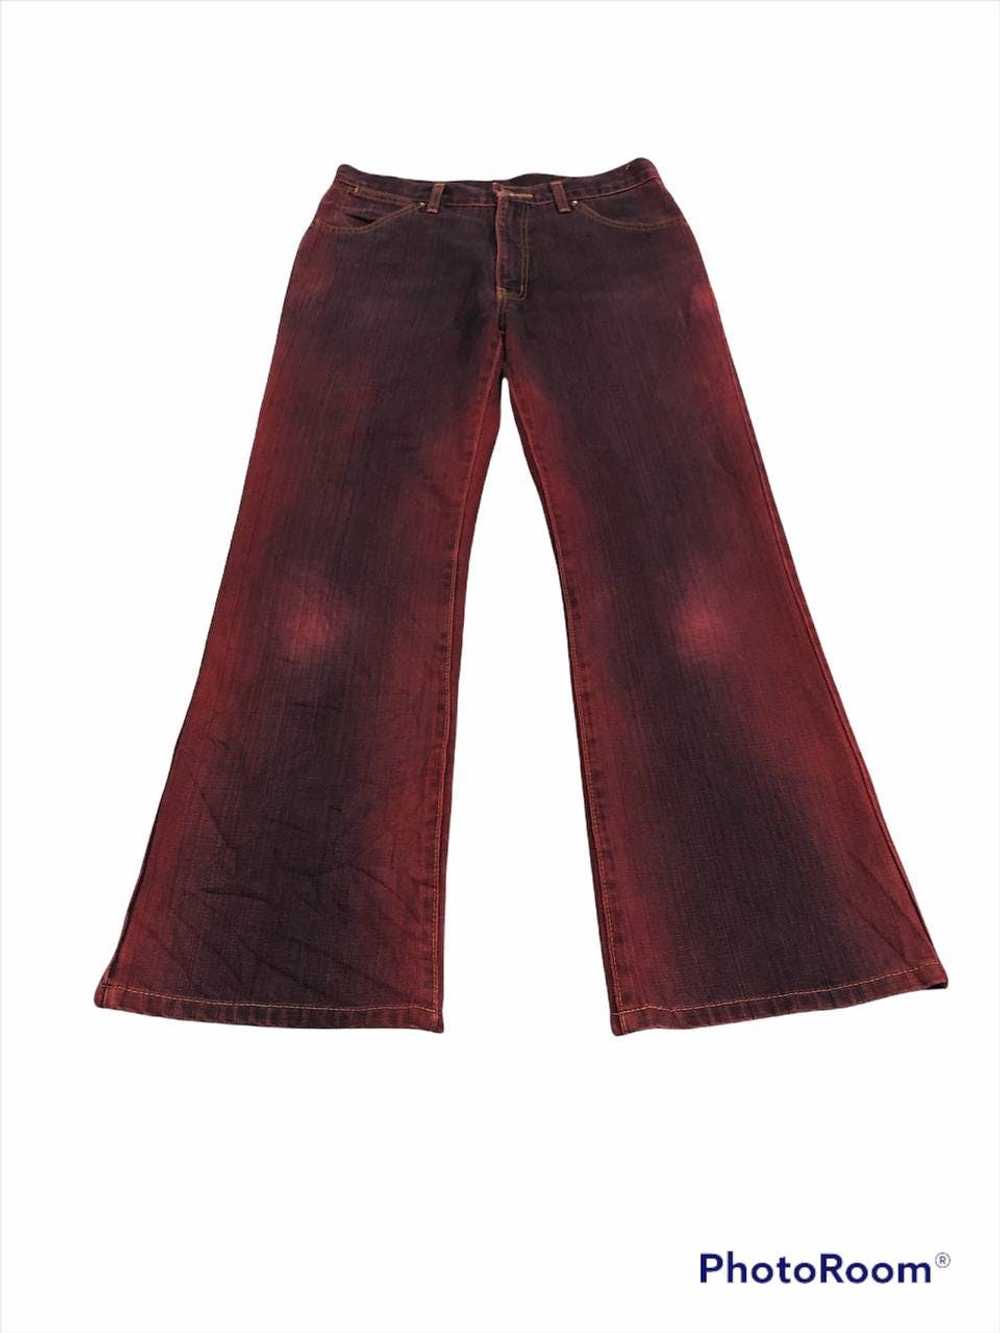 Vintage Wrangler Faded Marron Denim Pants - image 2